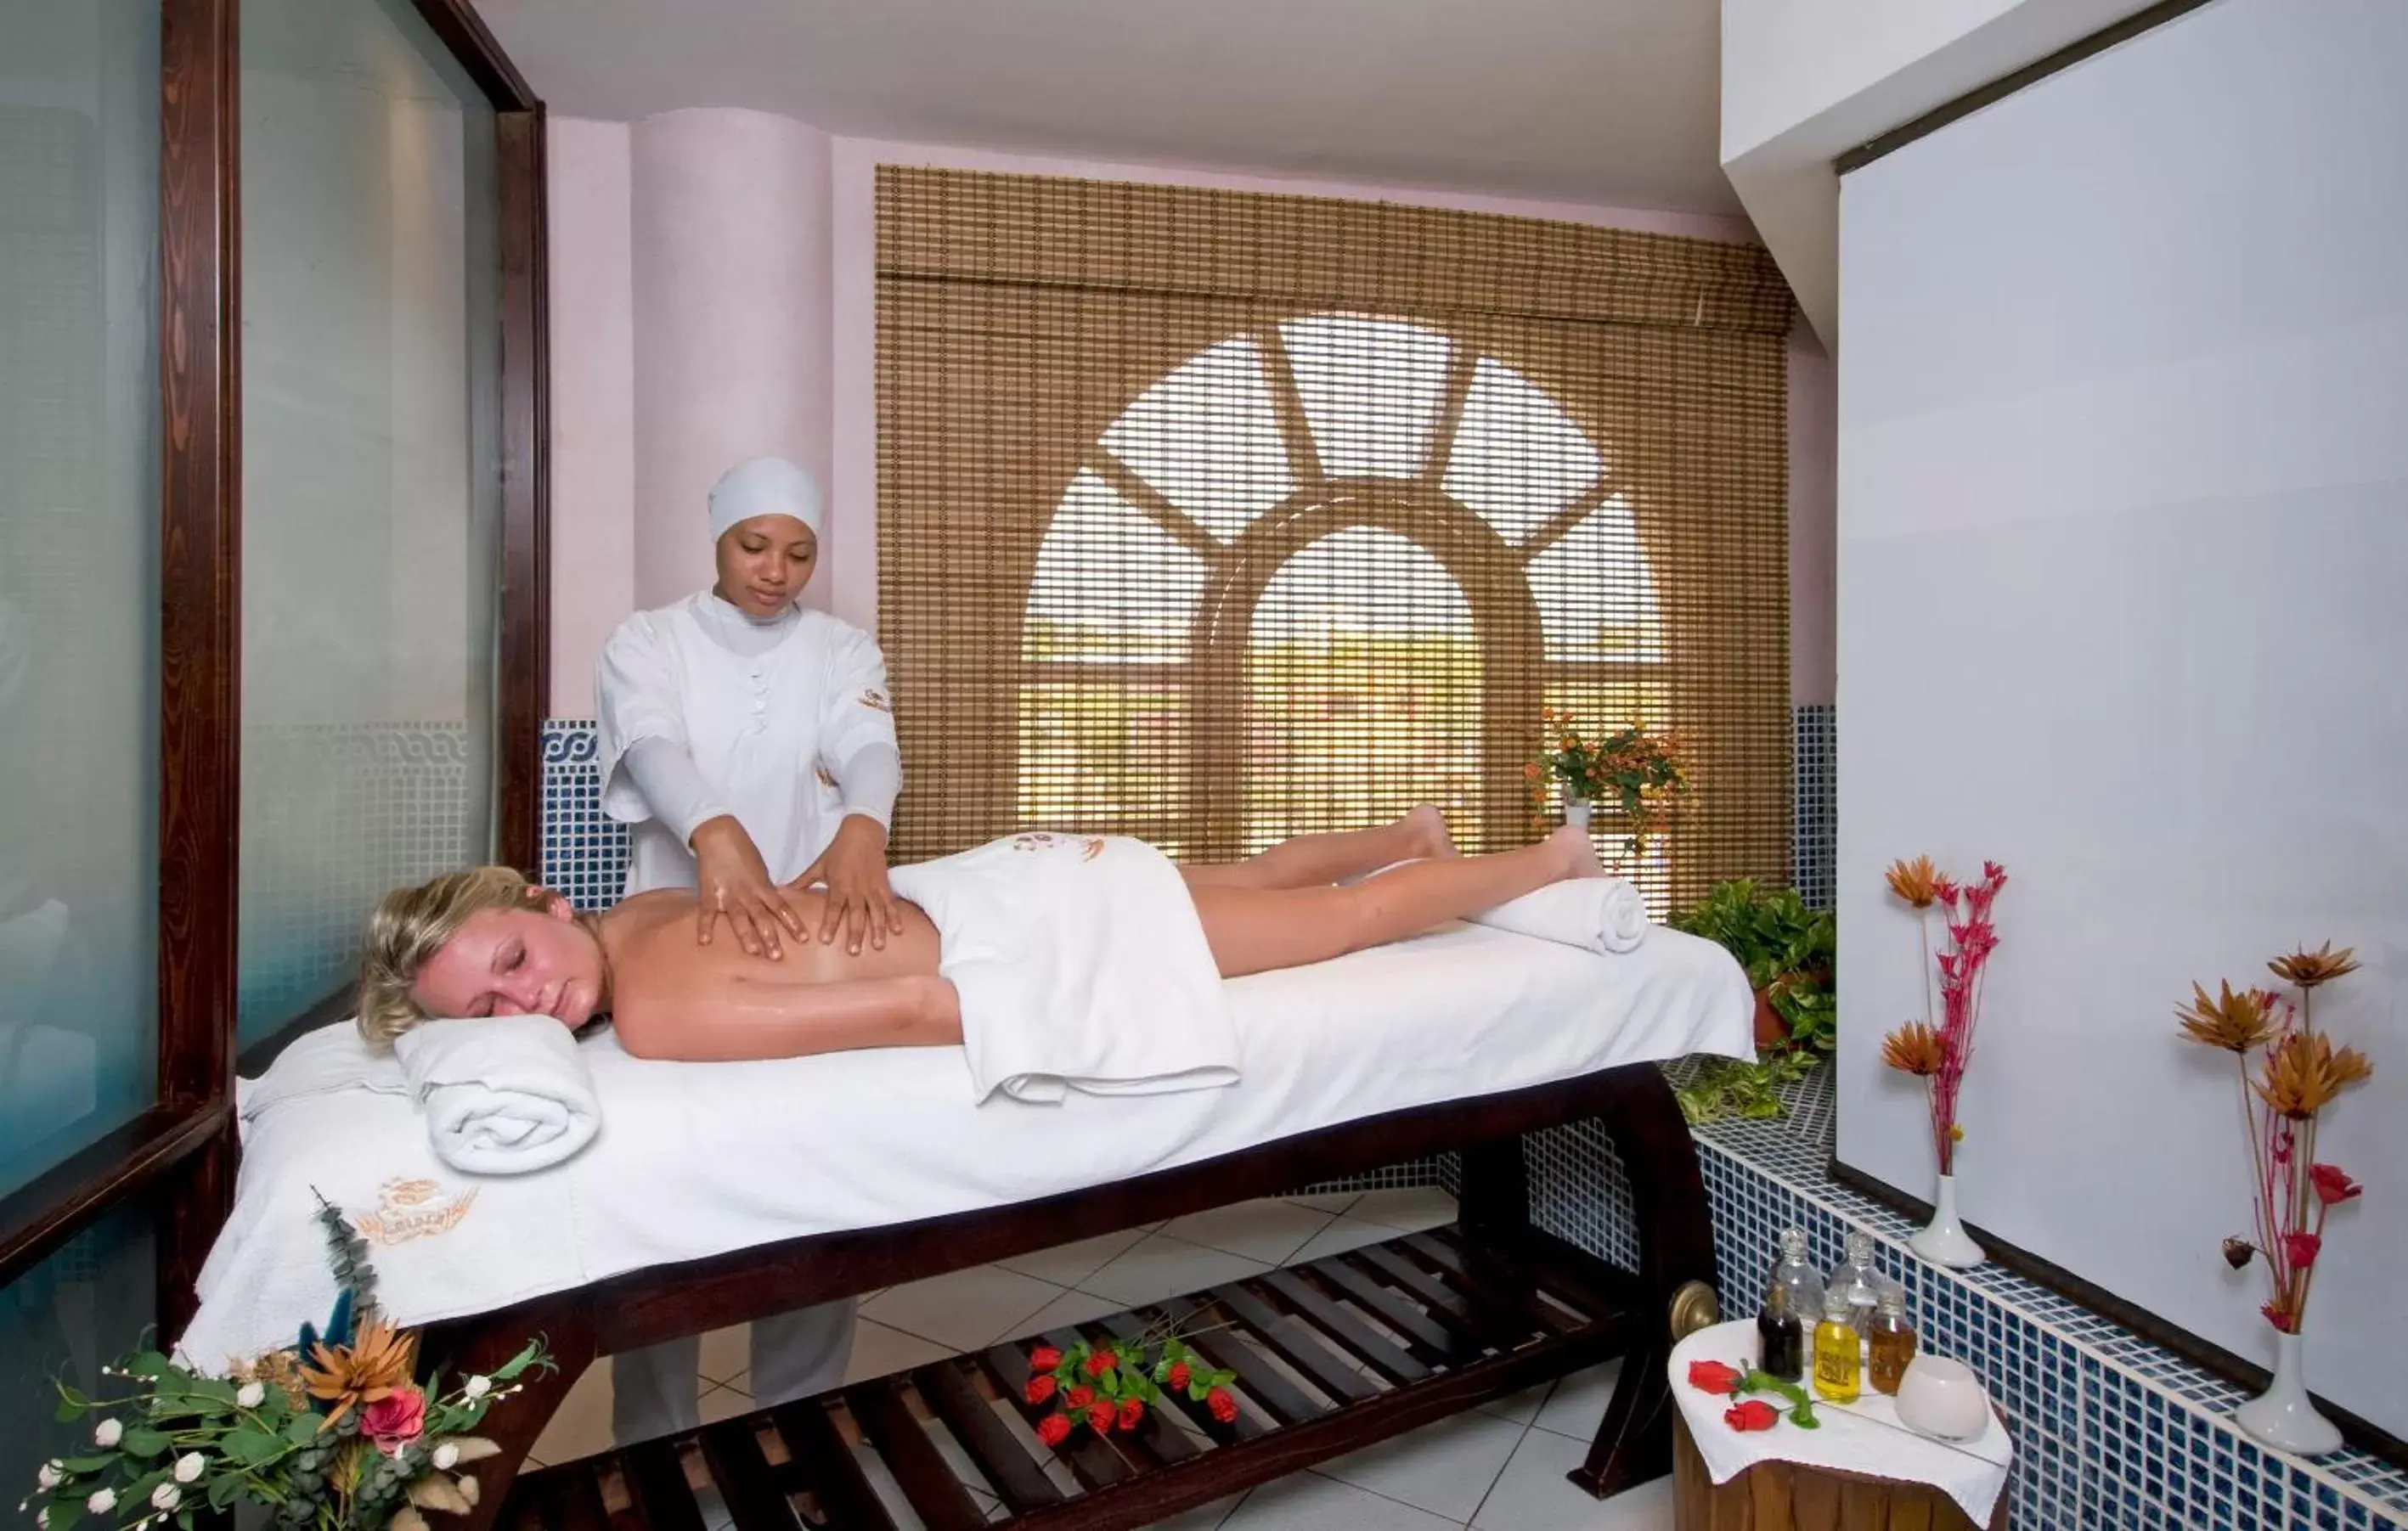 Spa and wellness centre/facilities in Dreams Vacation Resort - Sharm El Sheikh